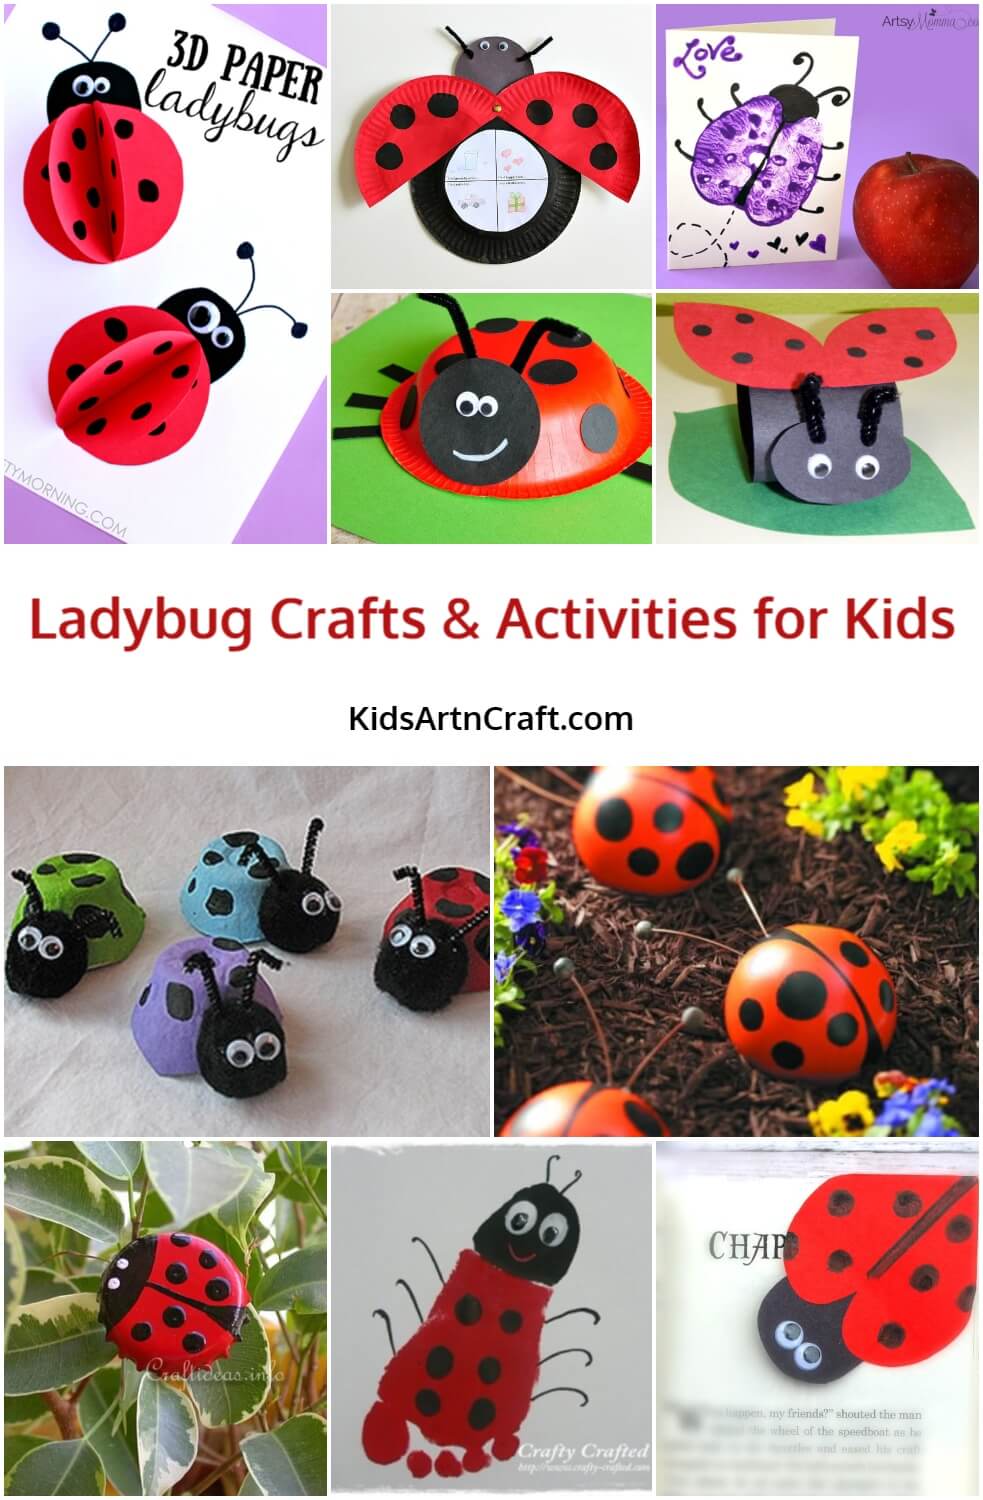 Ladybug Crafts & Activities for Kids